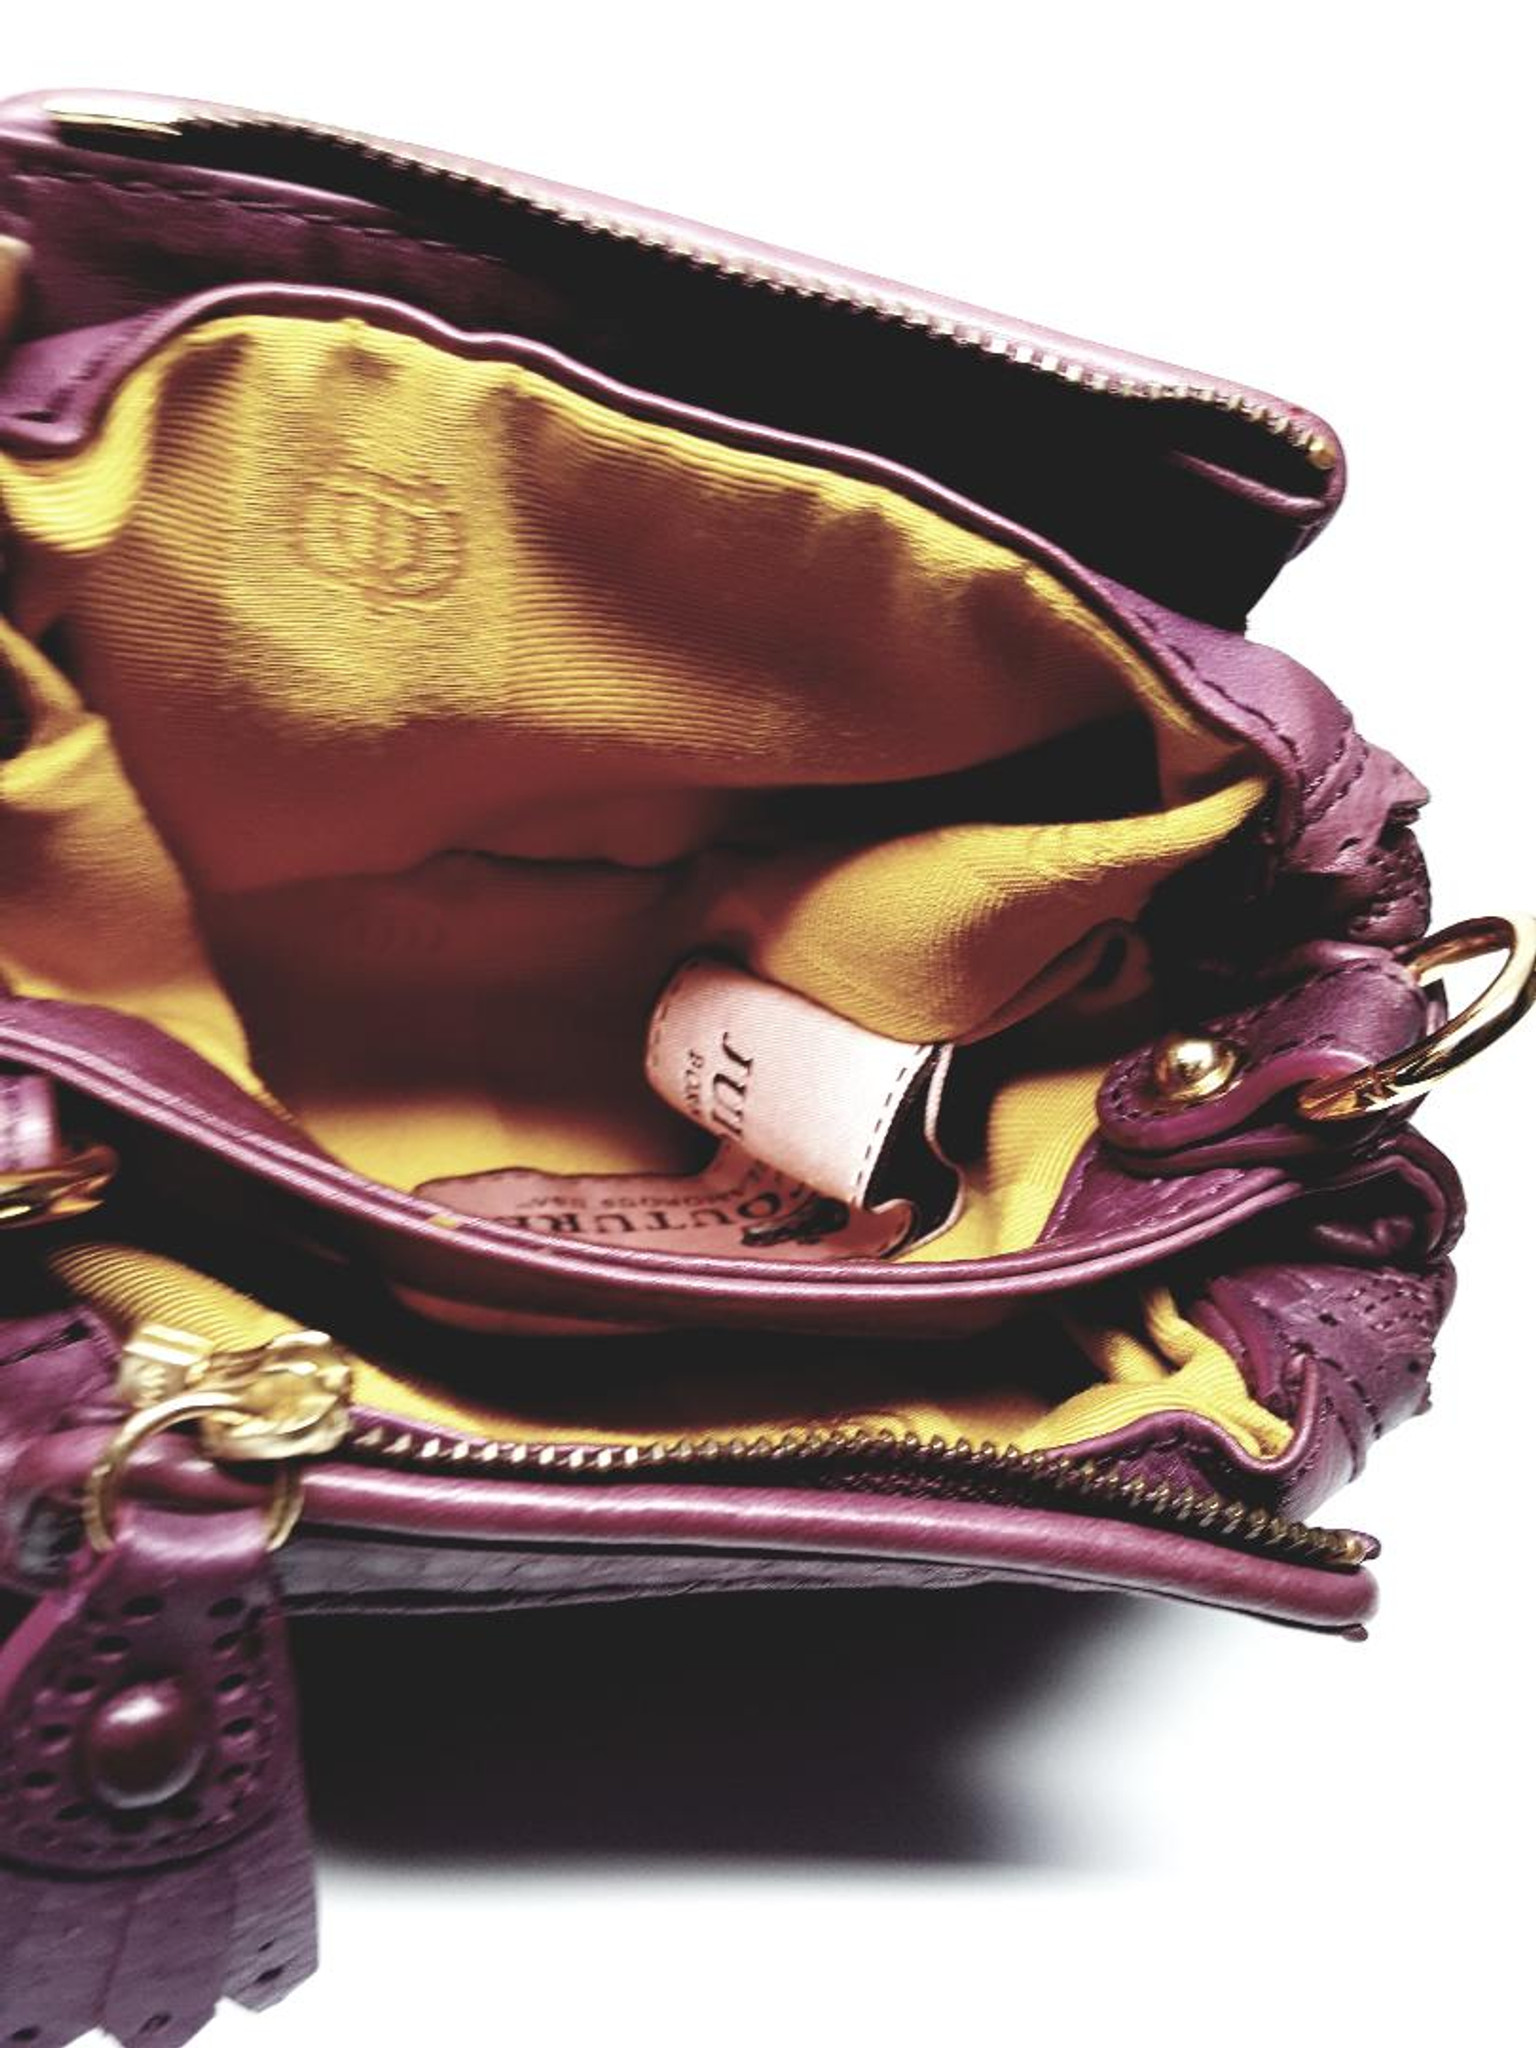 Velour Splendour Tote | Juicy couture purse, Juicy couture bags, Fashion  bags